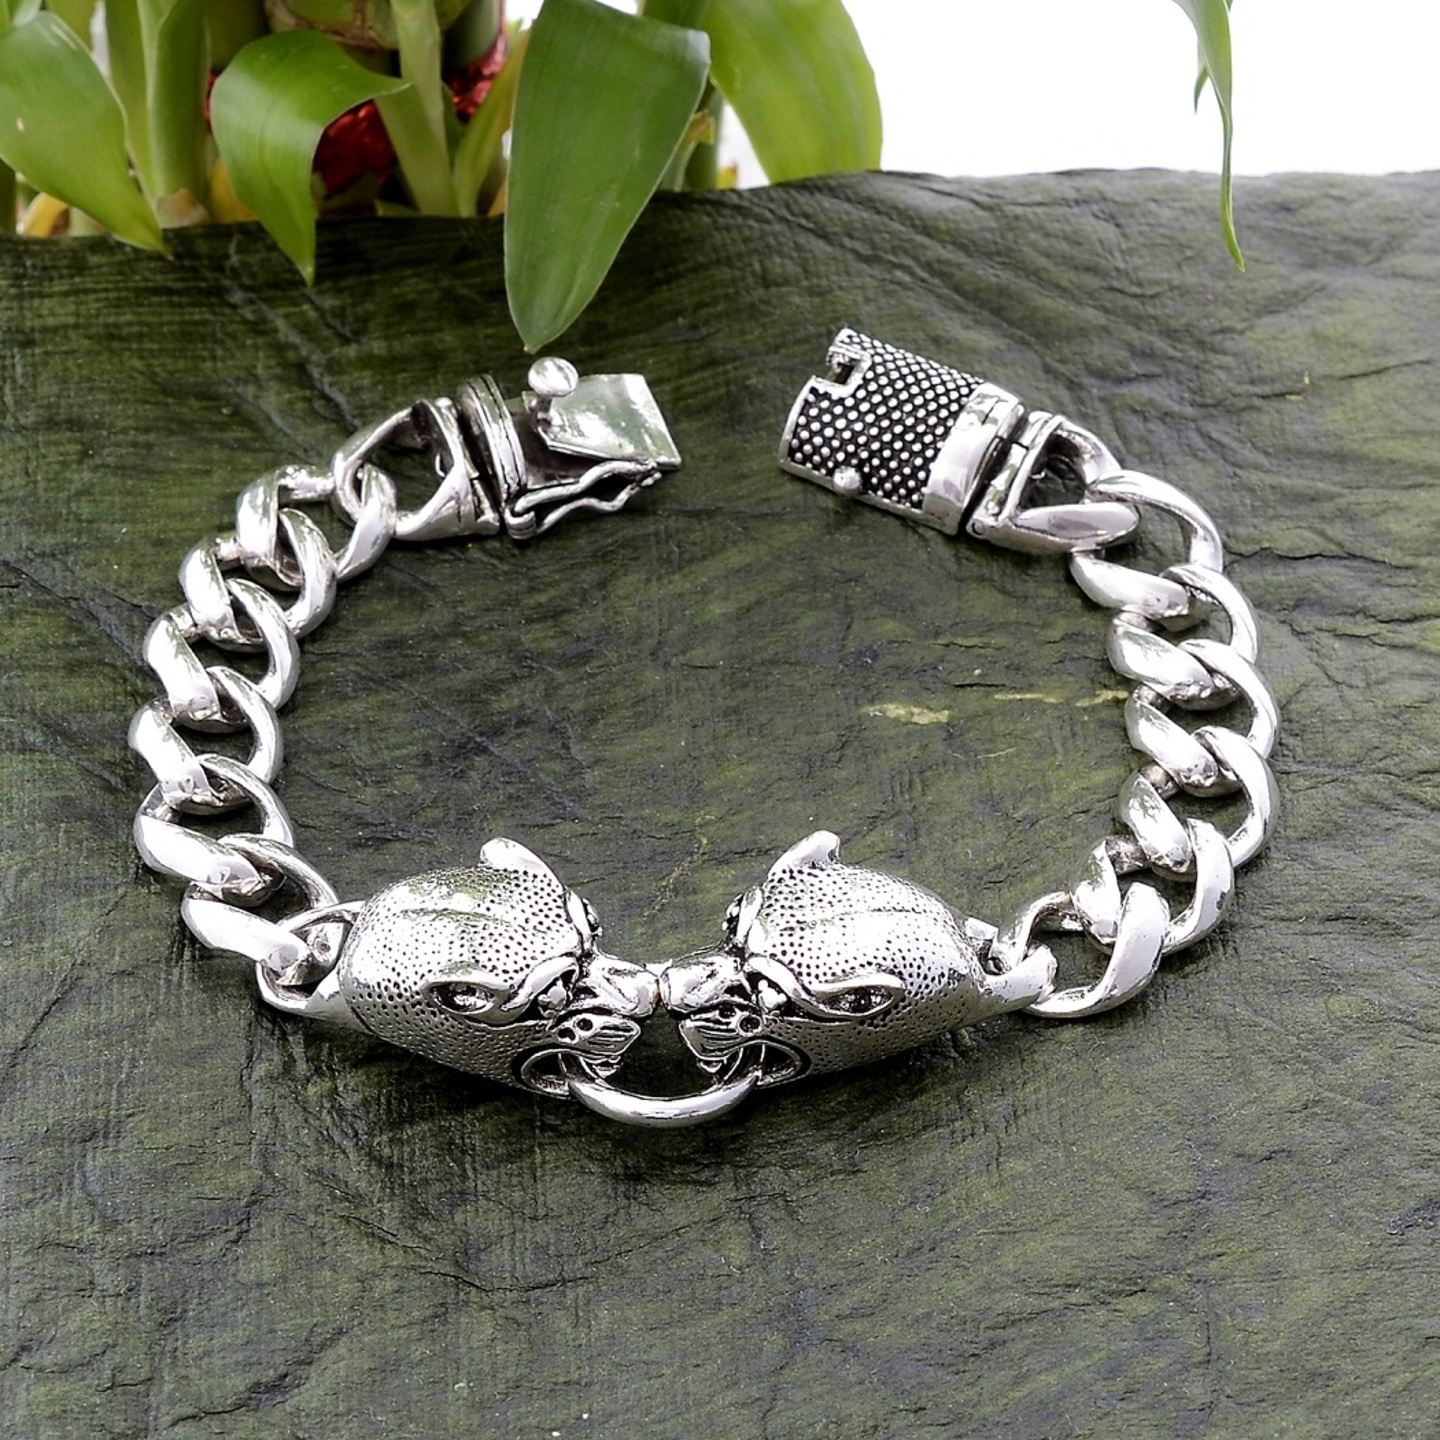 925 Solid Sterling Silver Jaguar Curb Chain Bracelet - Length 8.5 Inches - Oxidize Jewelry For Men - Stylish Leopard Bracelet 